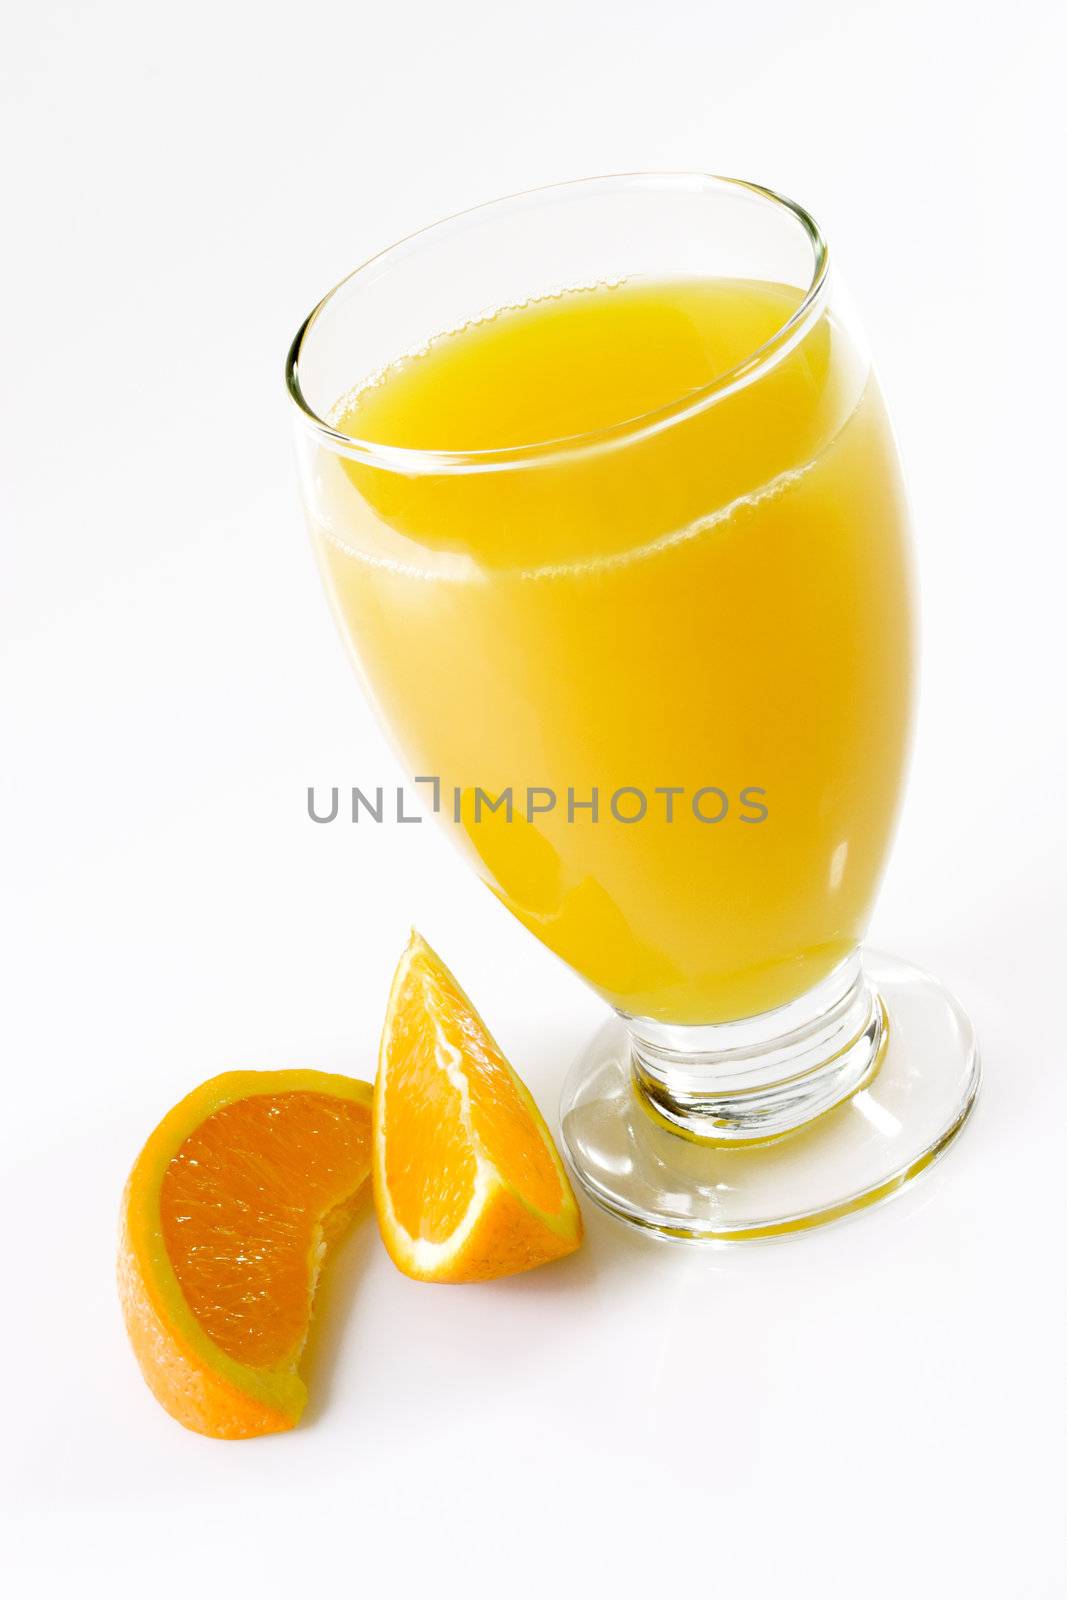 Glass of orange juice with garnish on light background